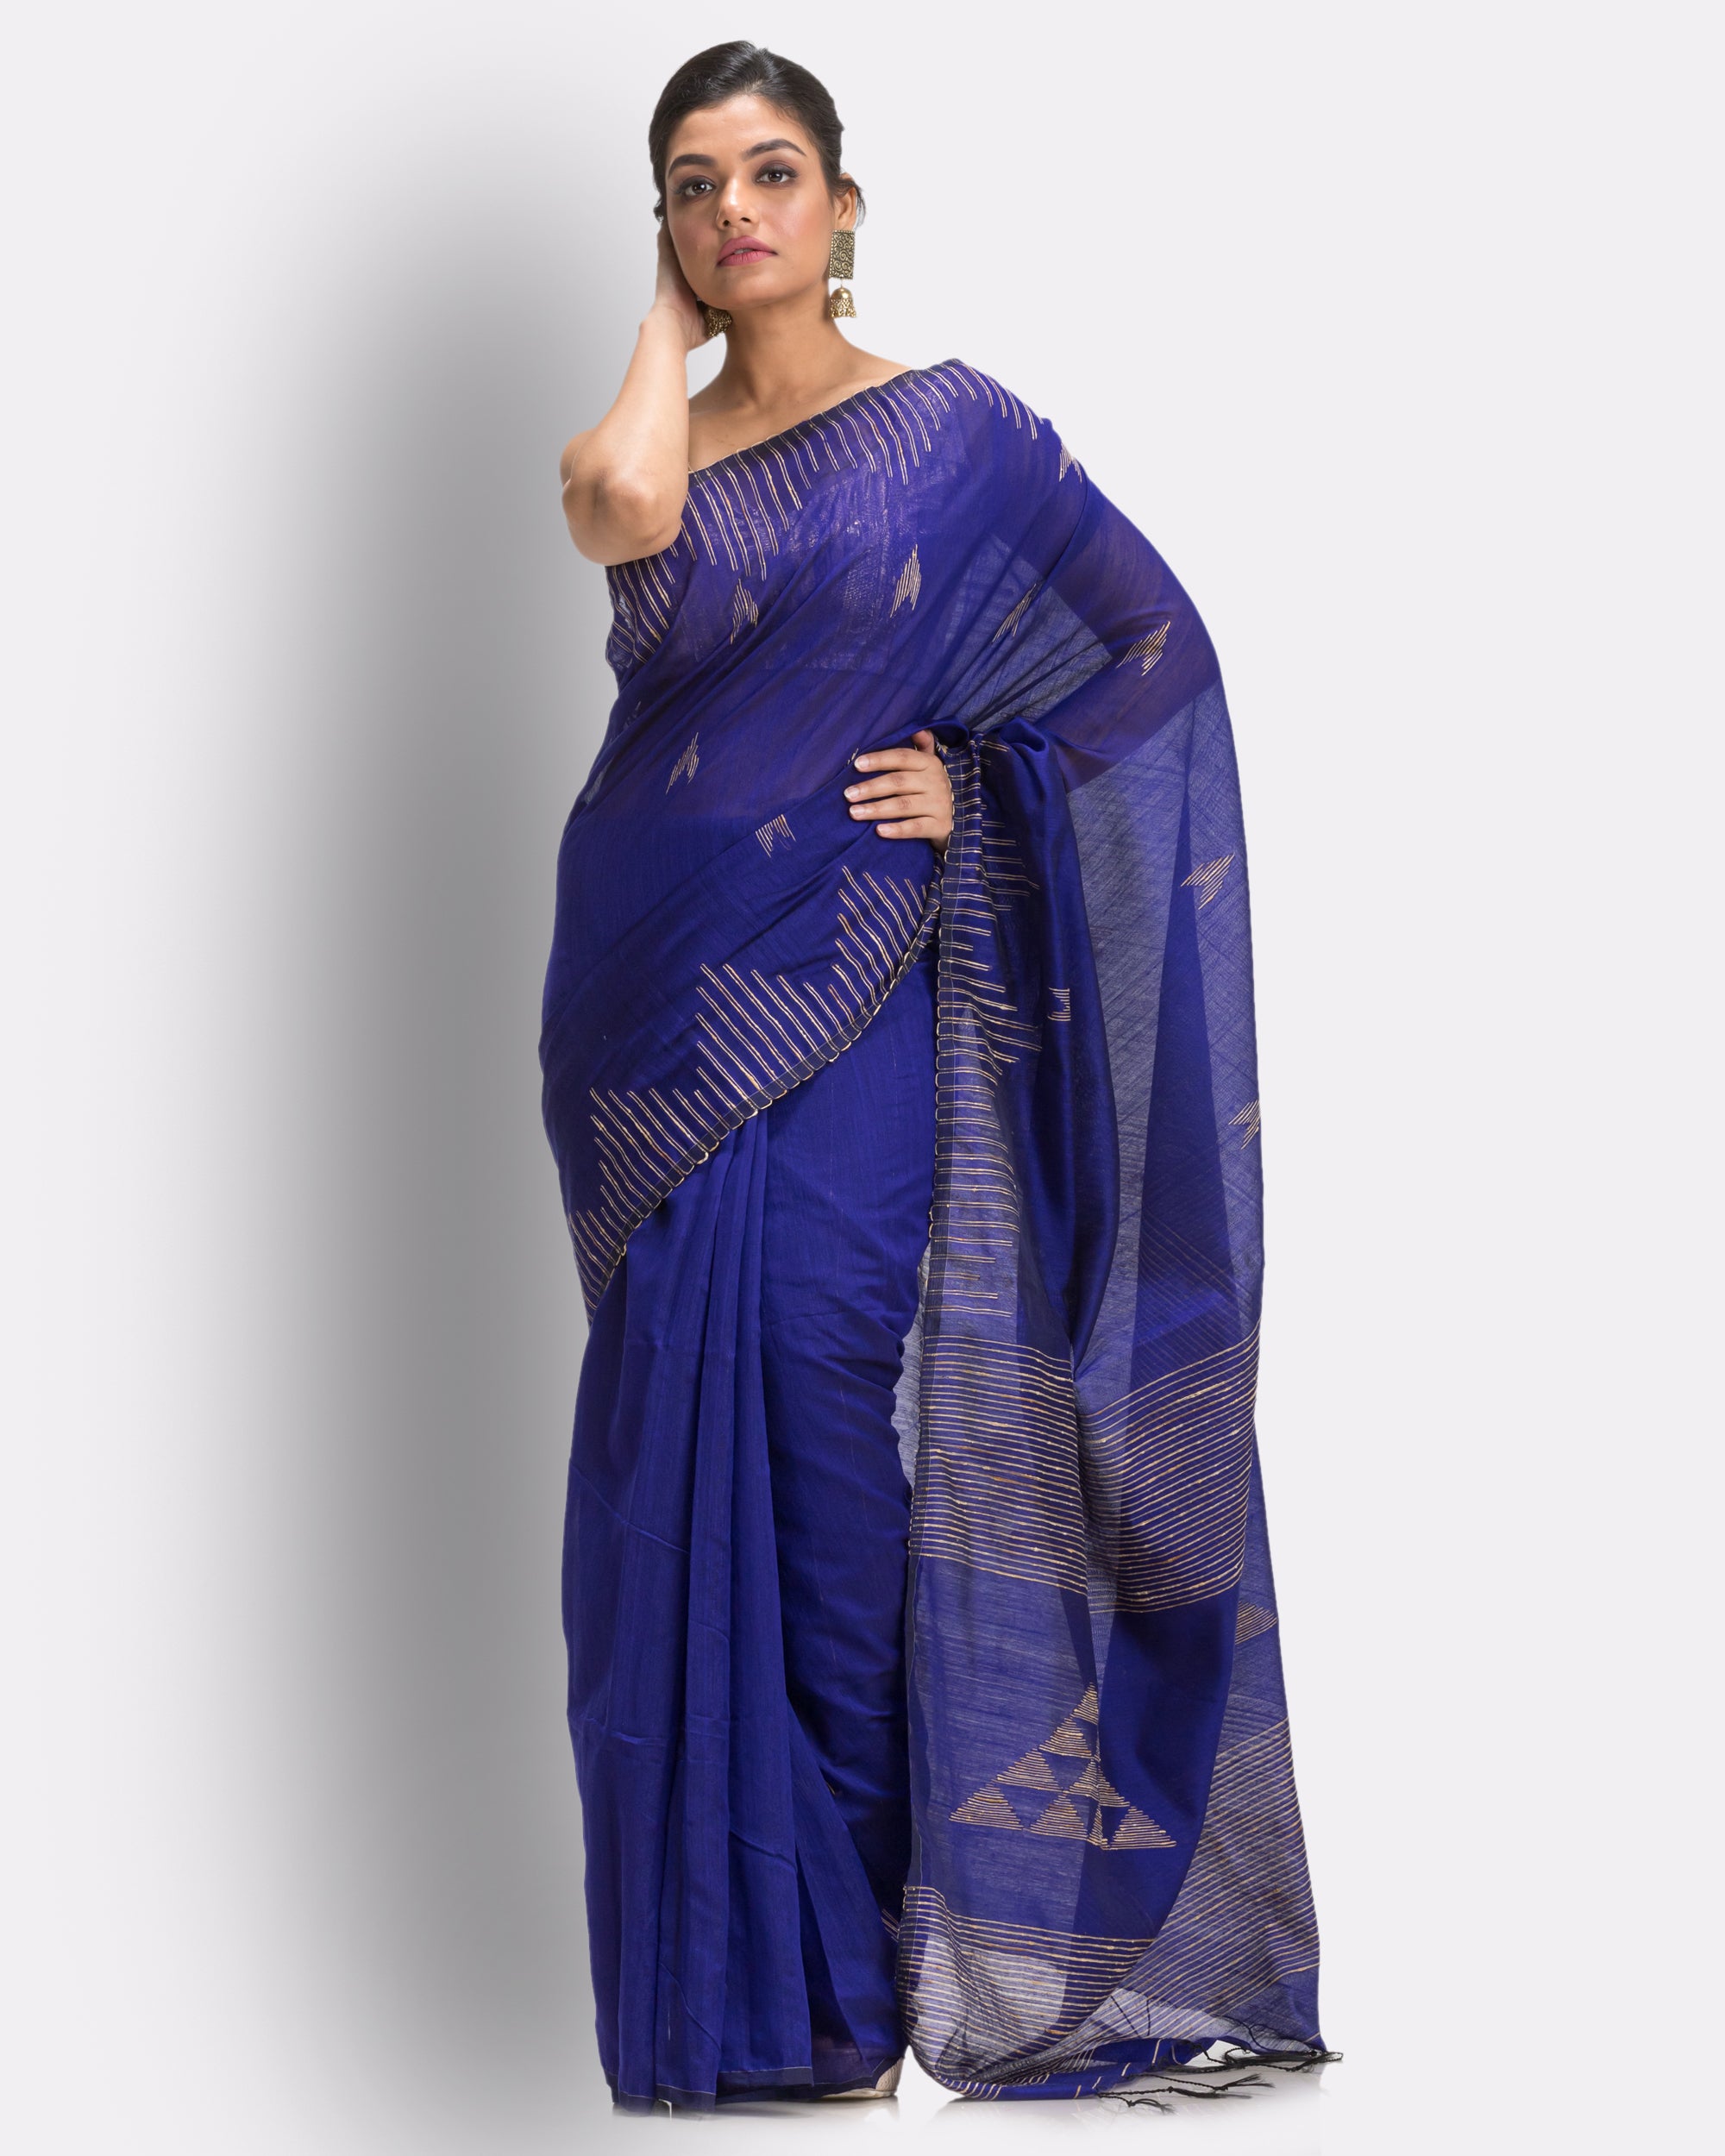 Women's Royel Blue Cotton Blend Handloom Saree - Piyari Fashion